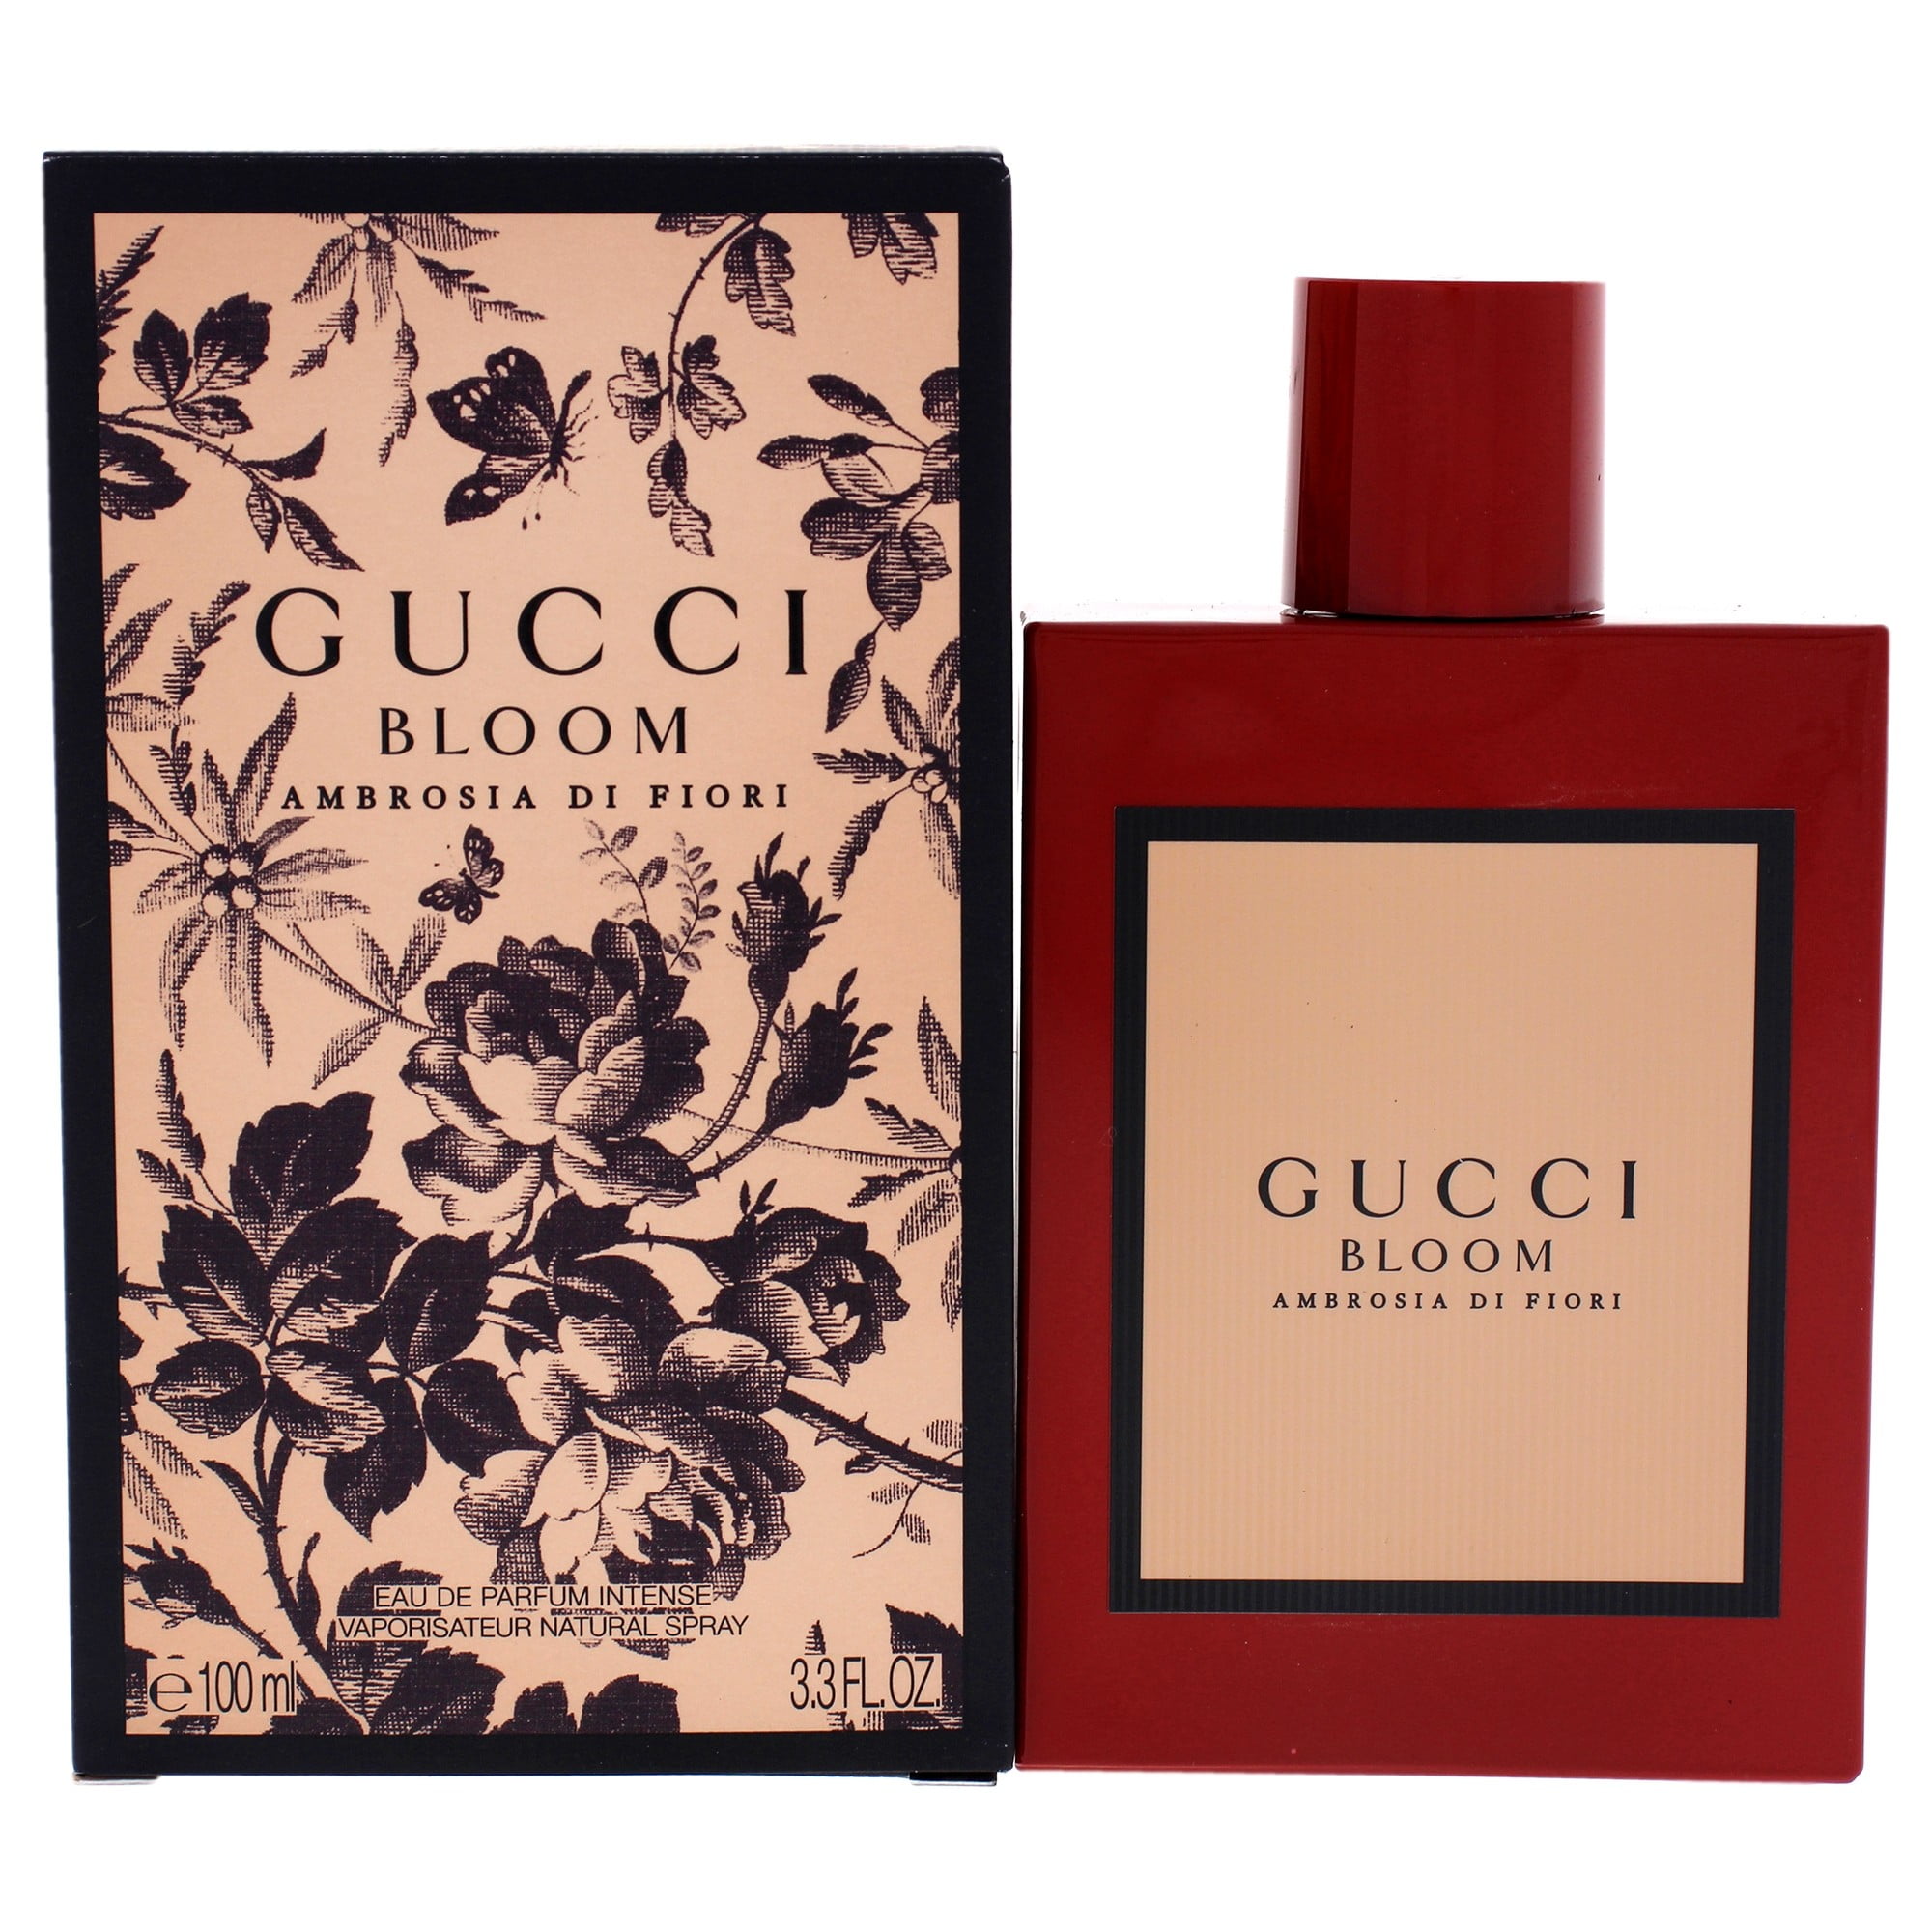 Gucci Bloom Di Fiori Eau De Parfum Intense, Perfume for Women, 3.3 Oz - Walmart.com